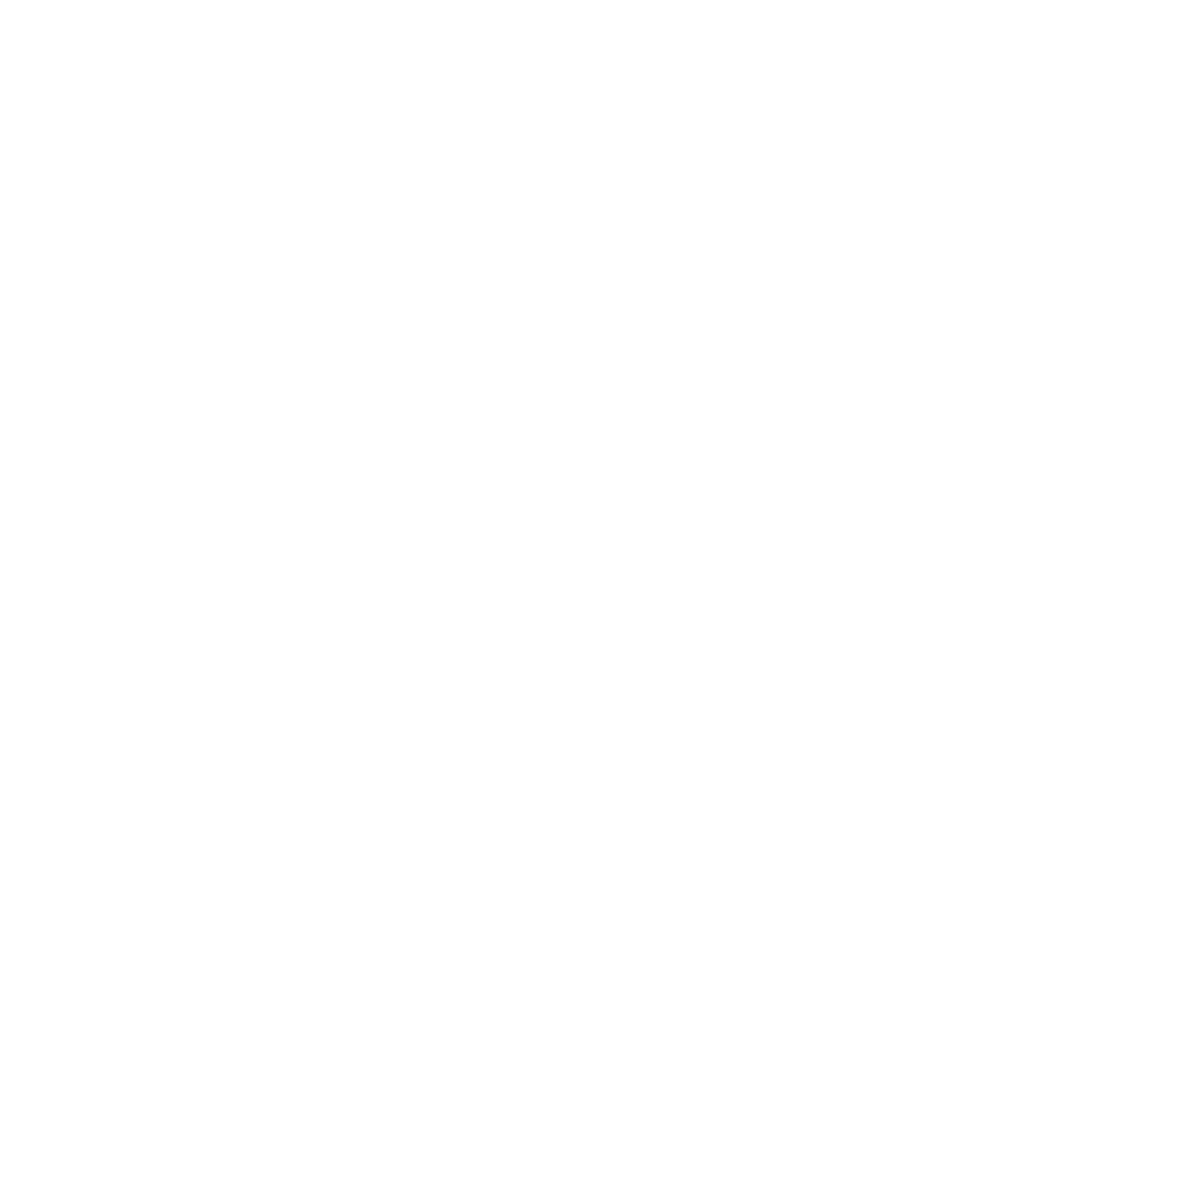 Maintenance icon and WordPress logo